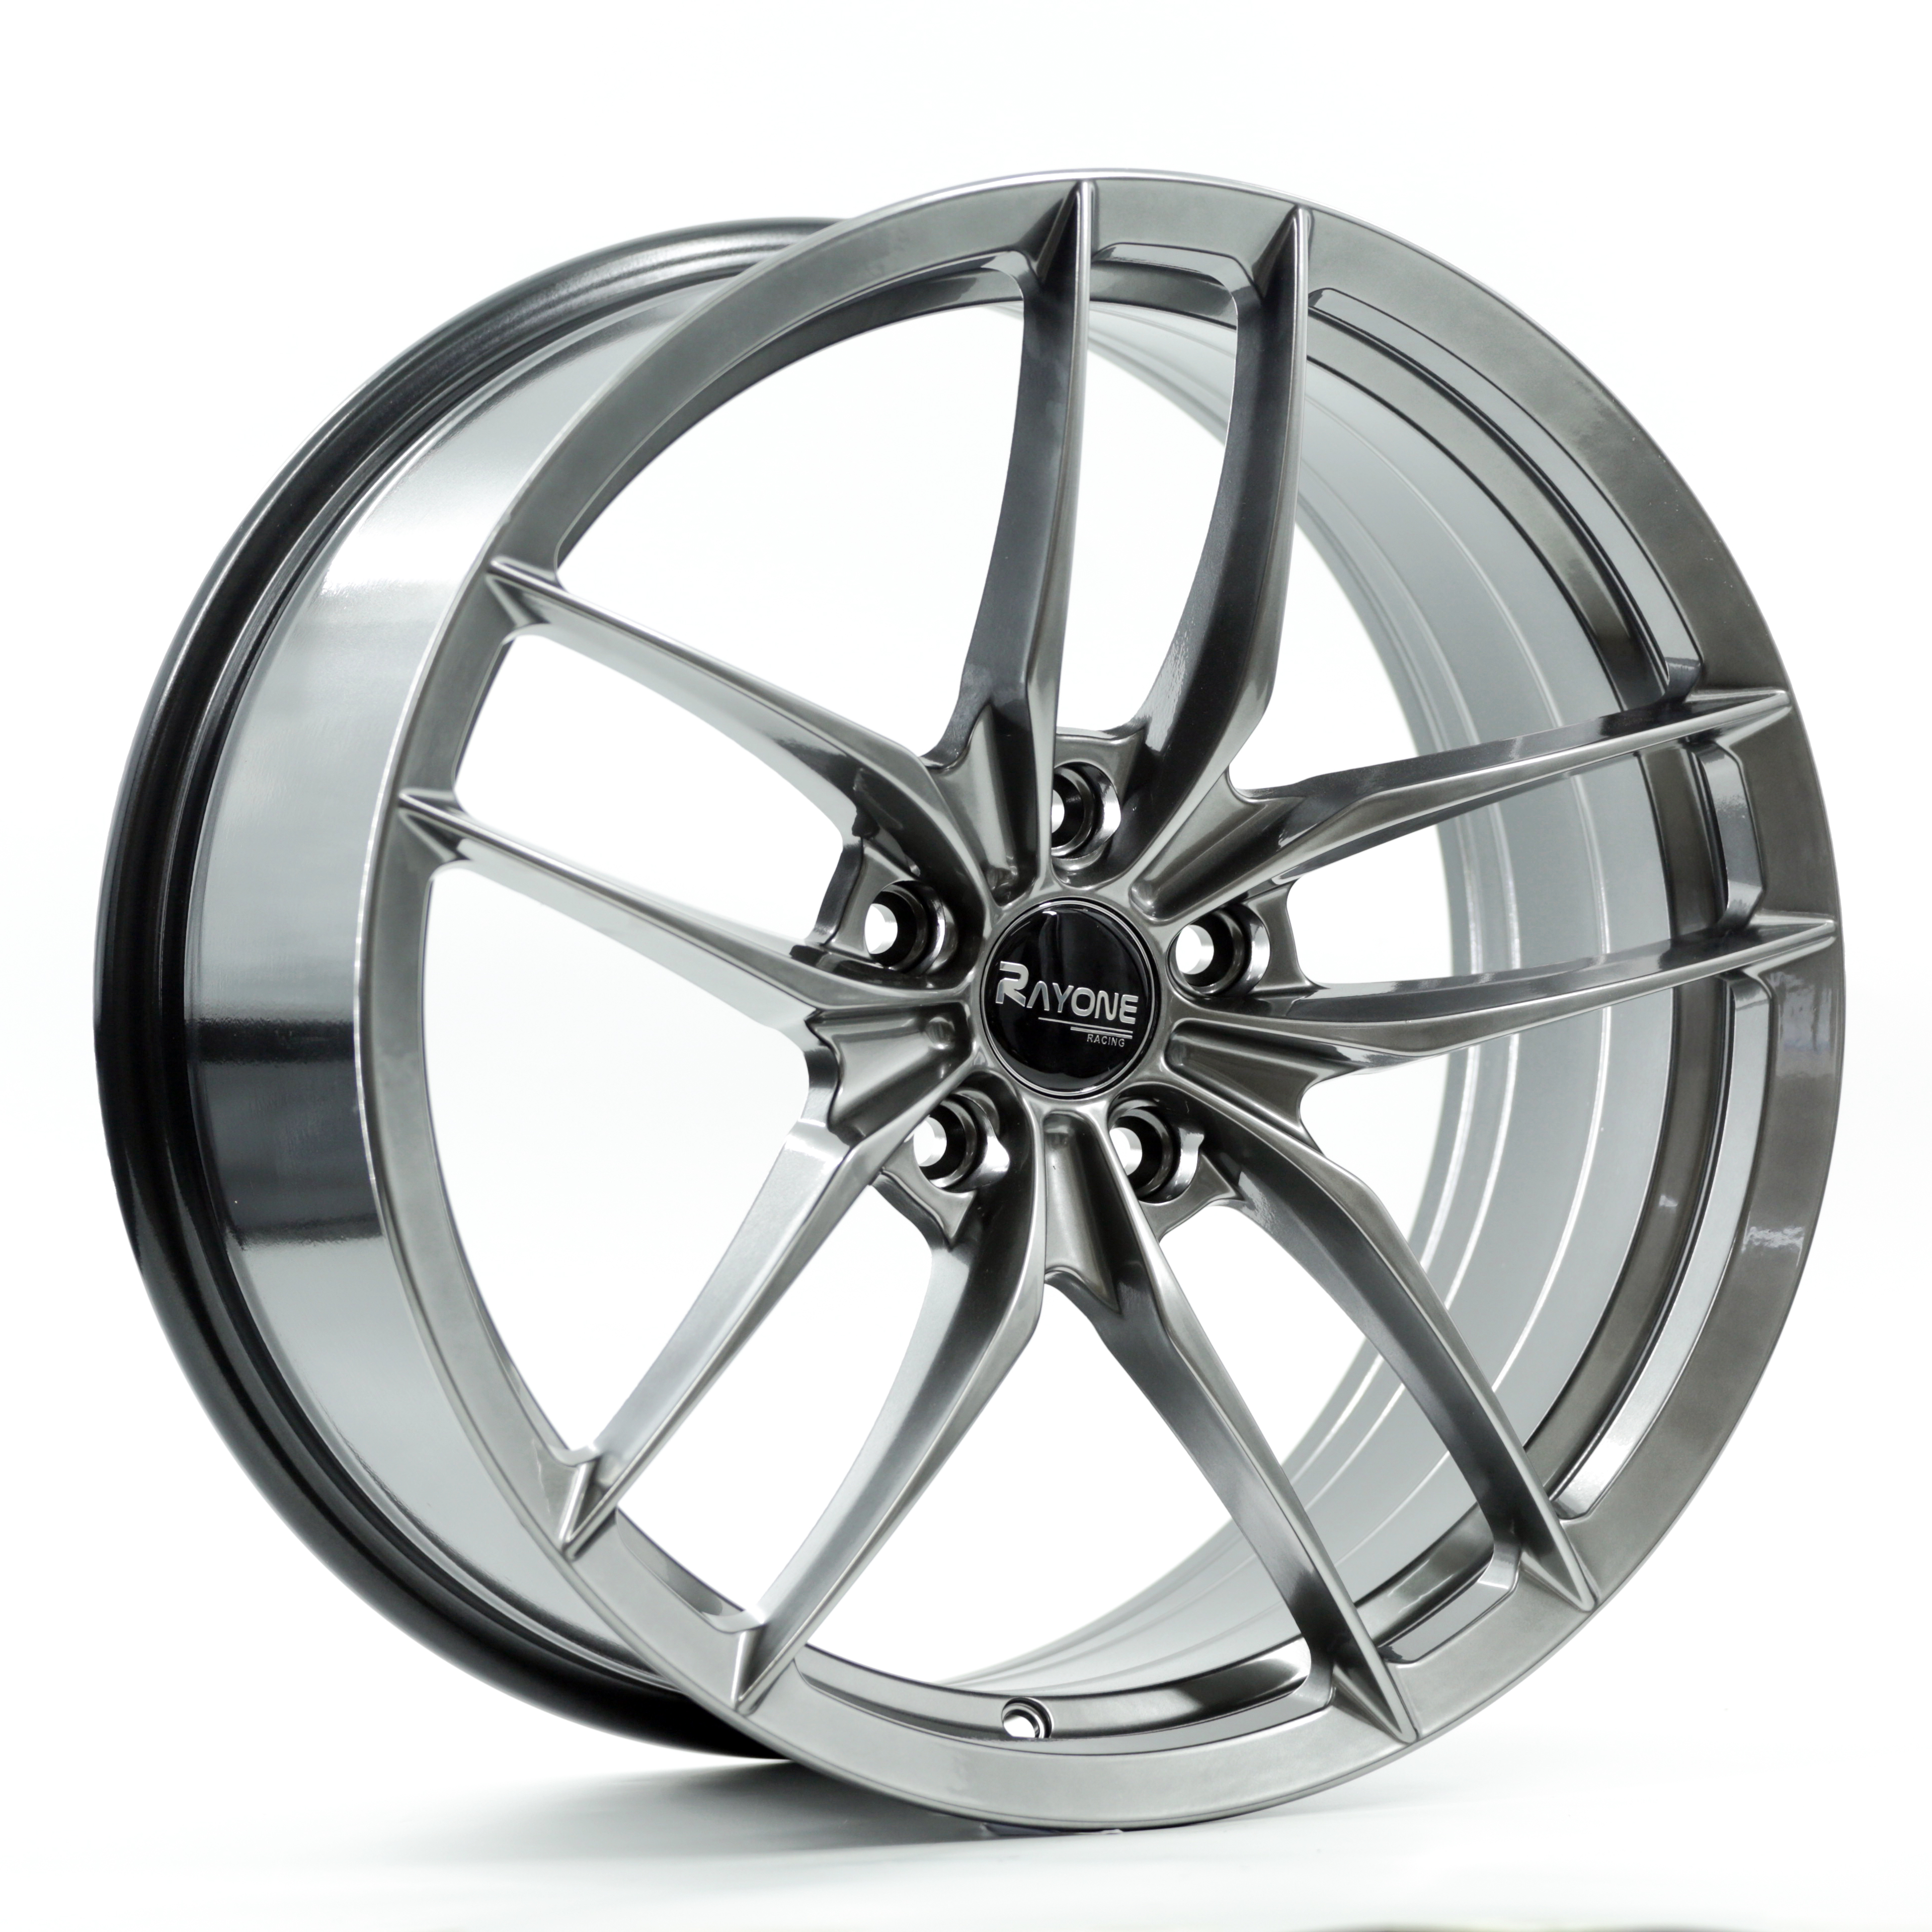 Rayone KS Forged Aluminum Alloy Wheels 18inch High Performance Wheels For Luxury Car